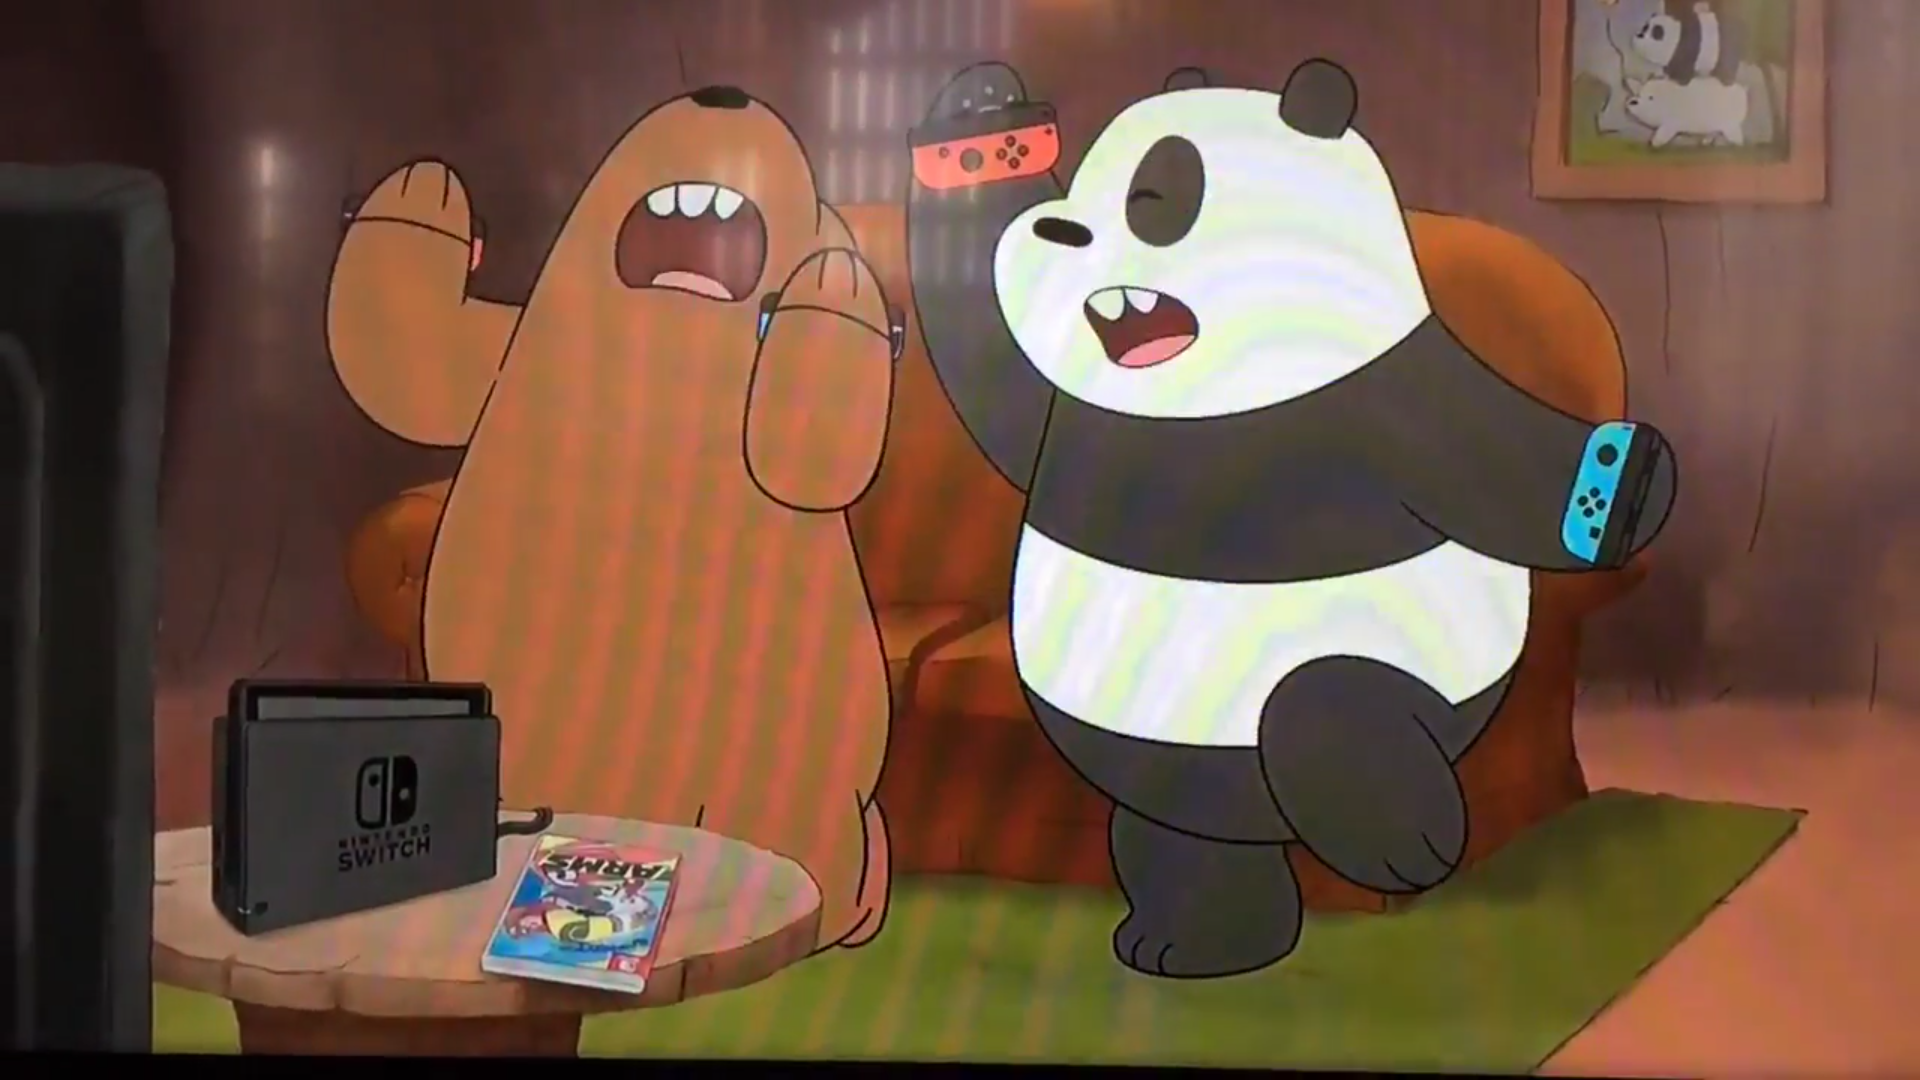 Programación TV Somos osos  El cumple de panda  AScom